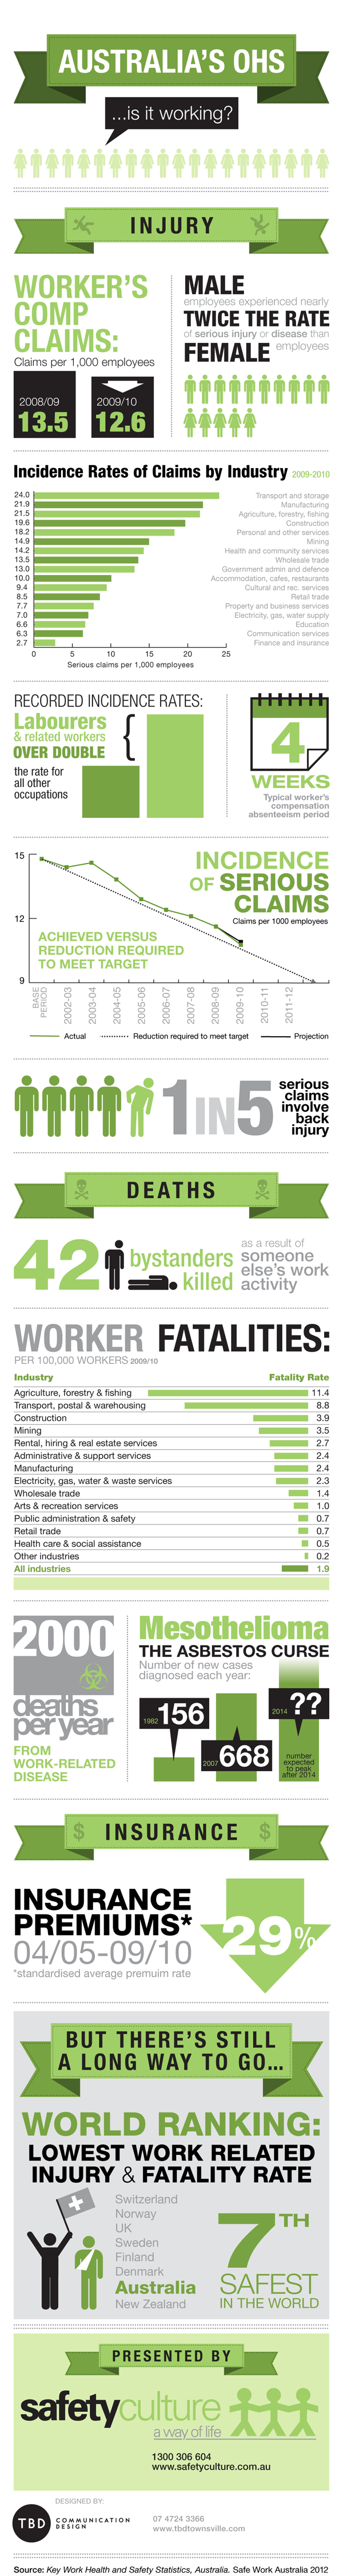 Safe Work Statistics in Australia